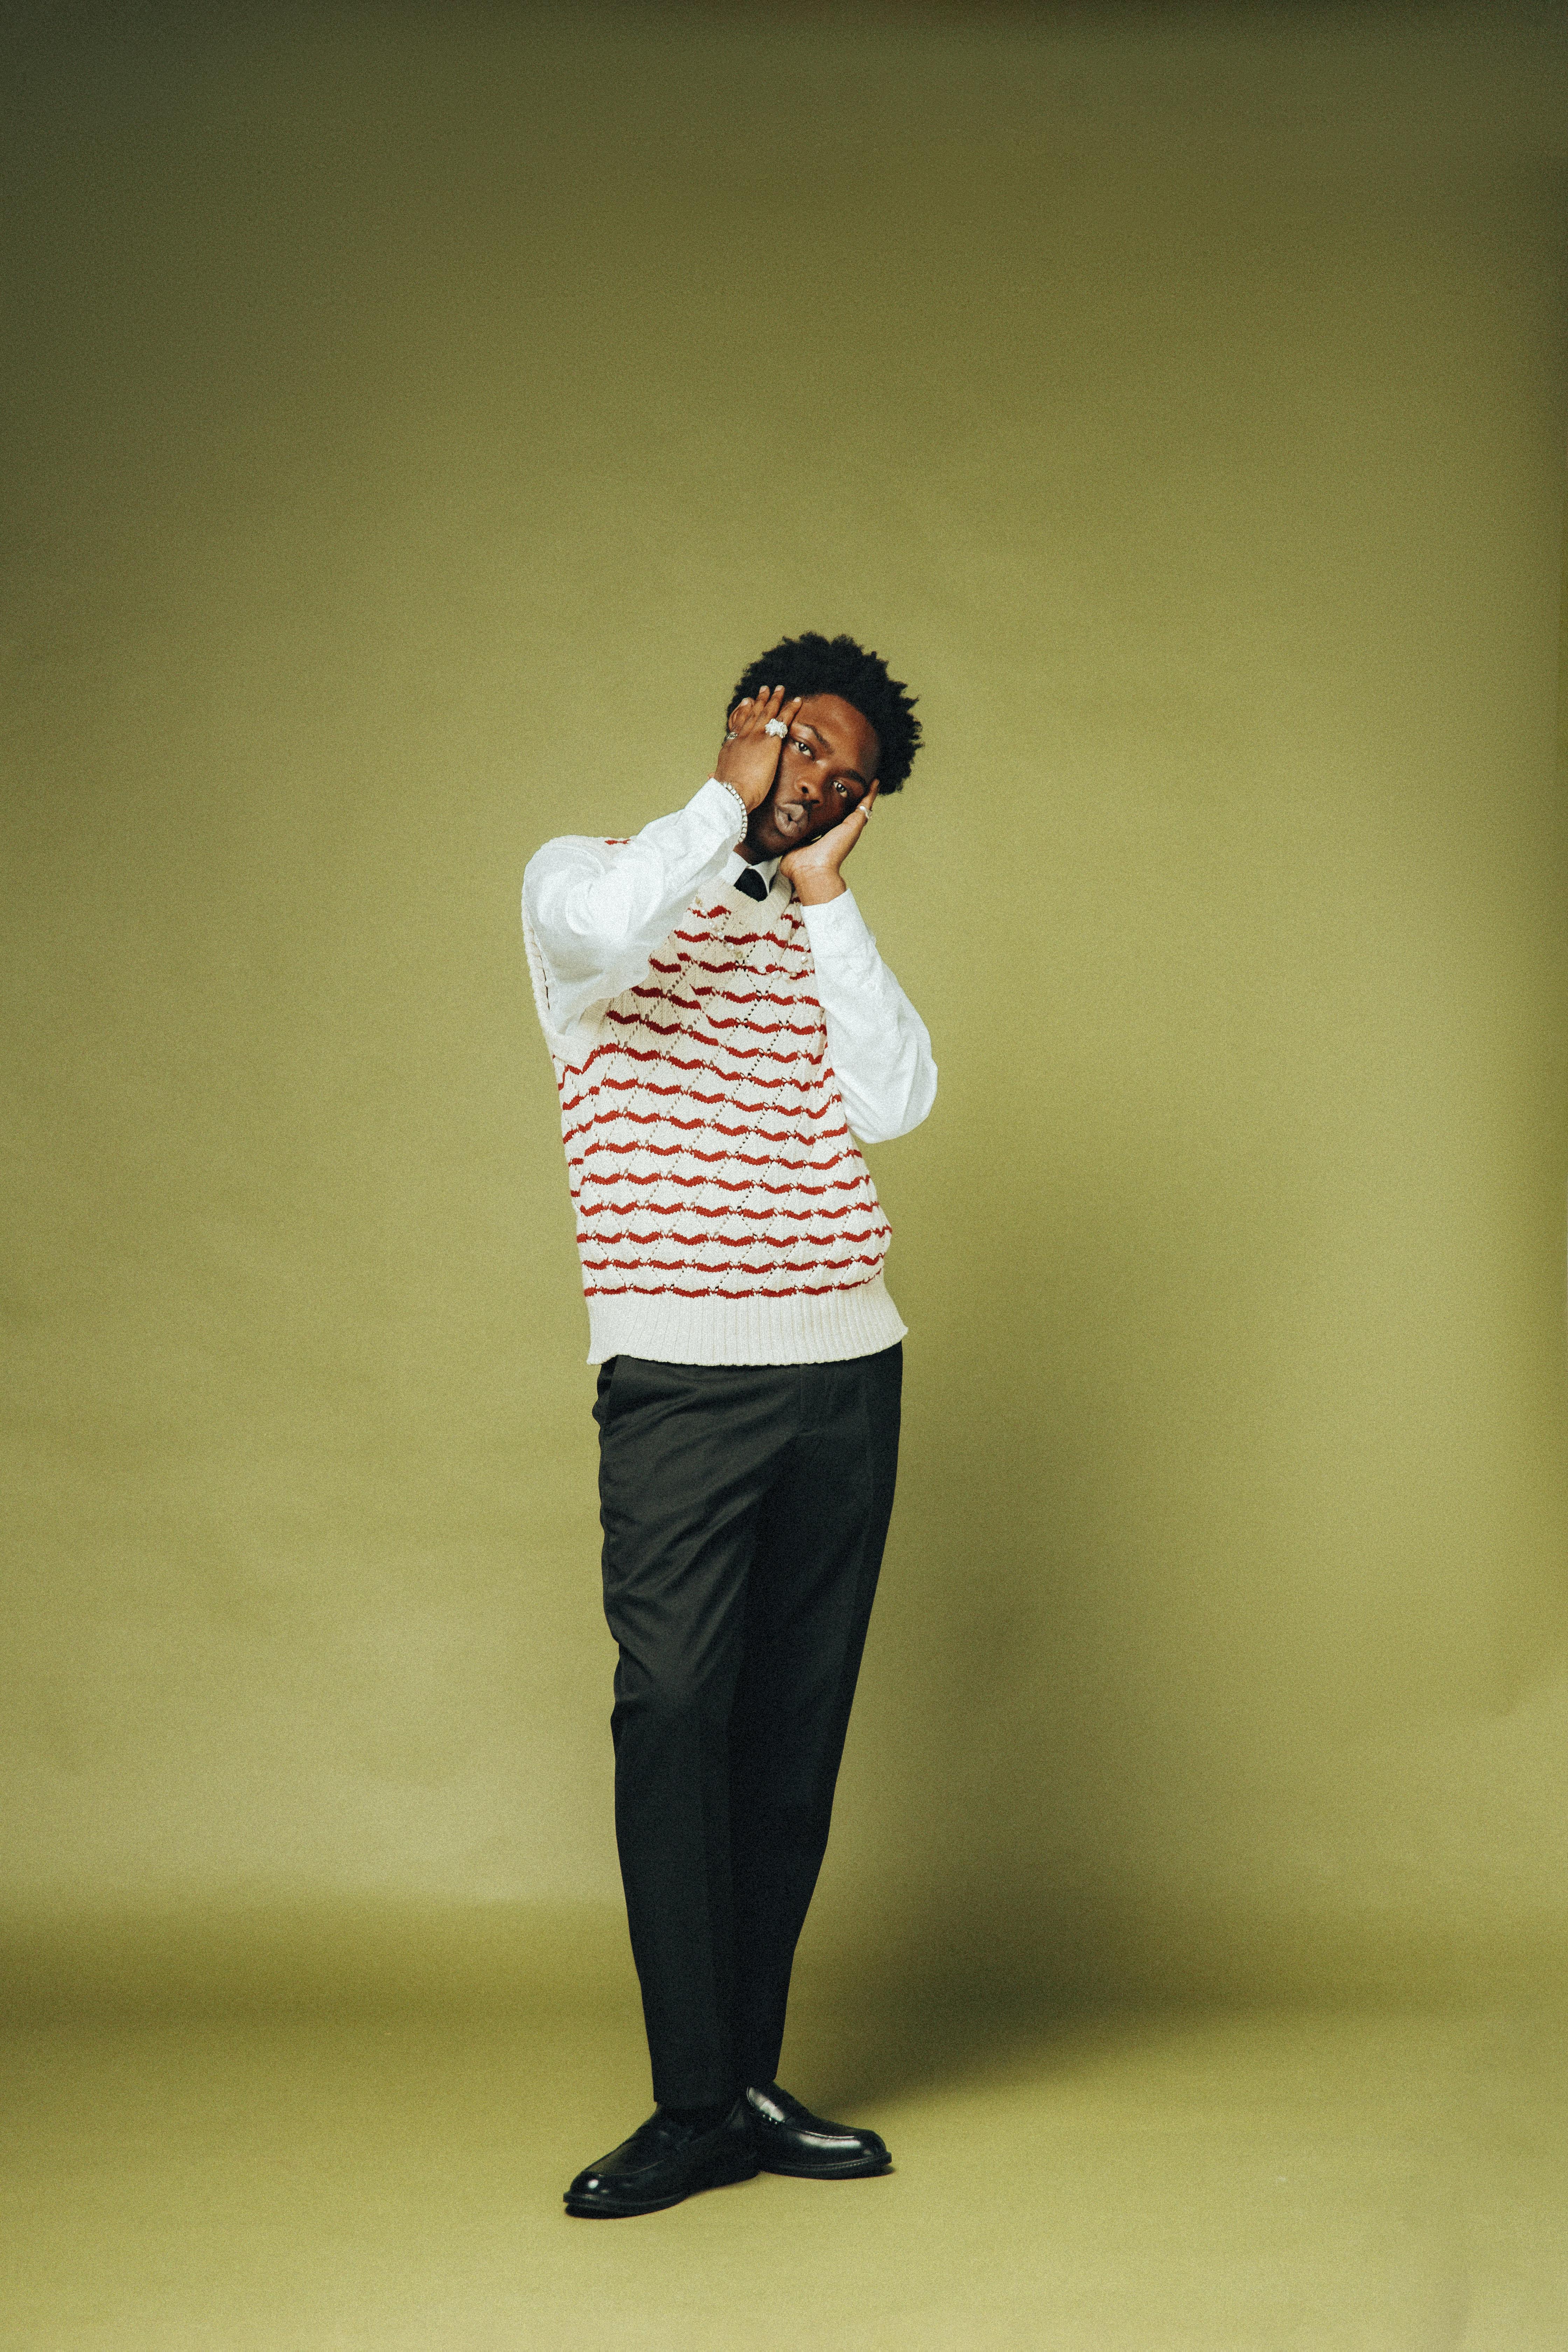 Man Posing in Sweater